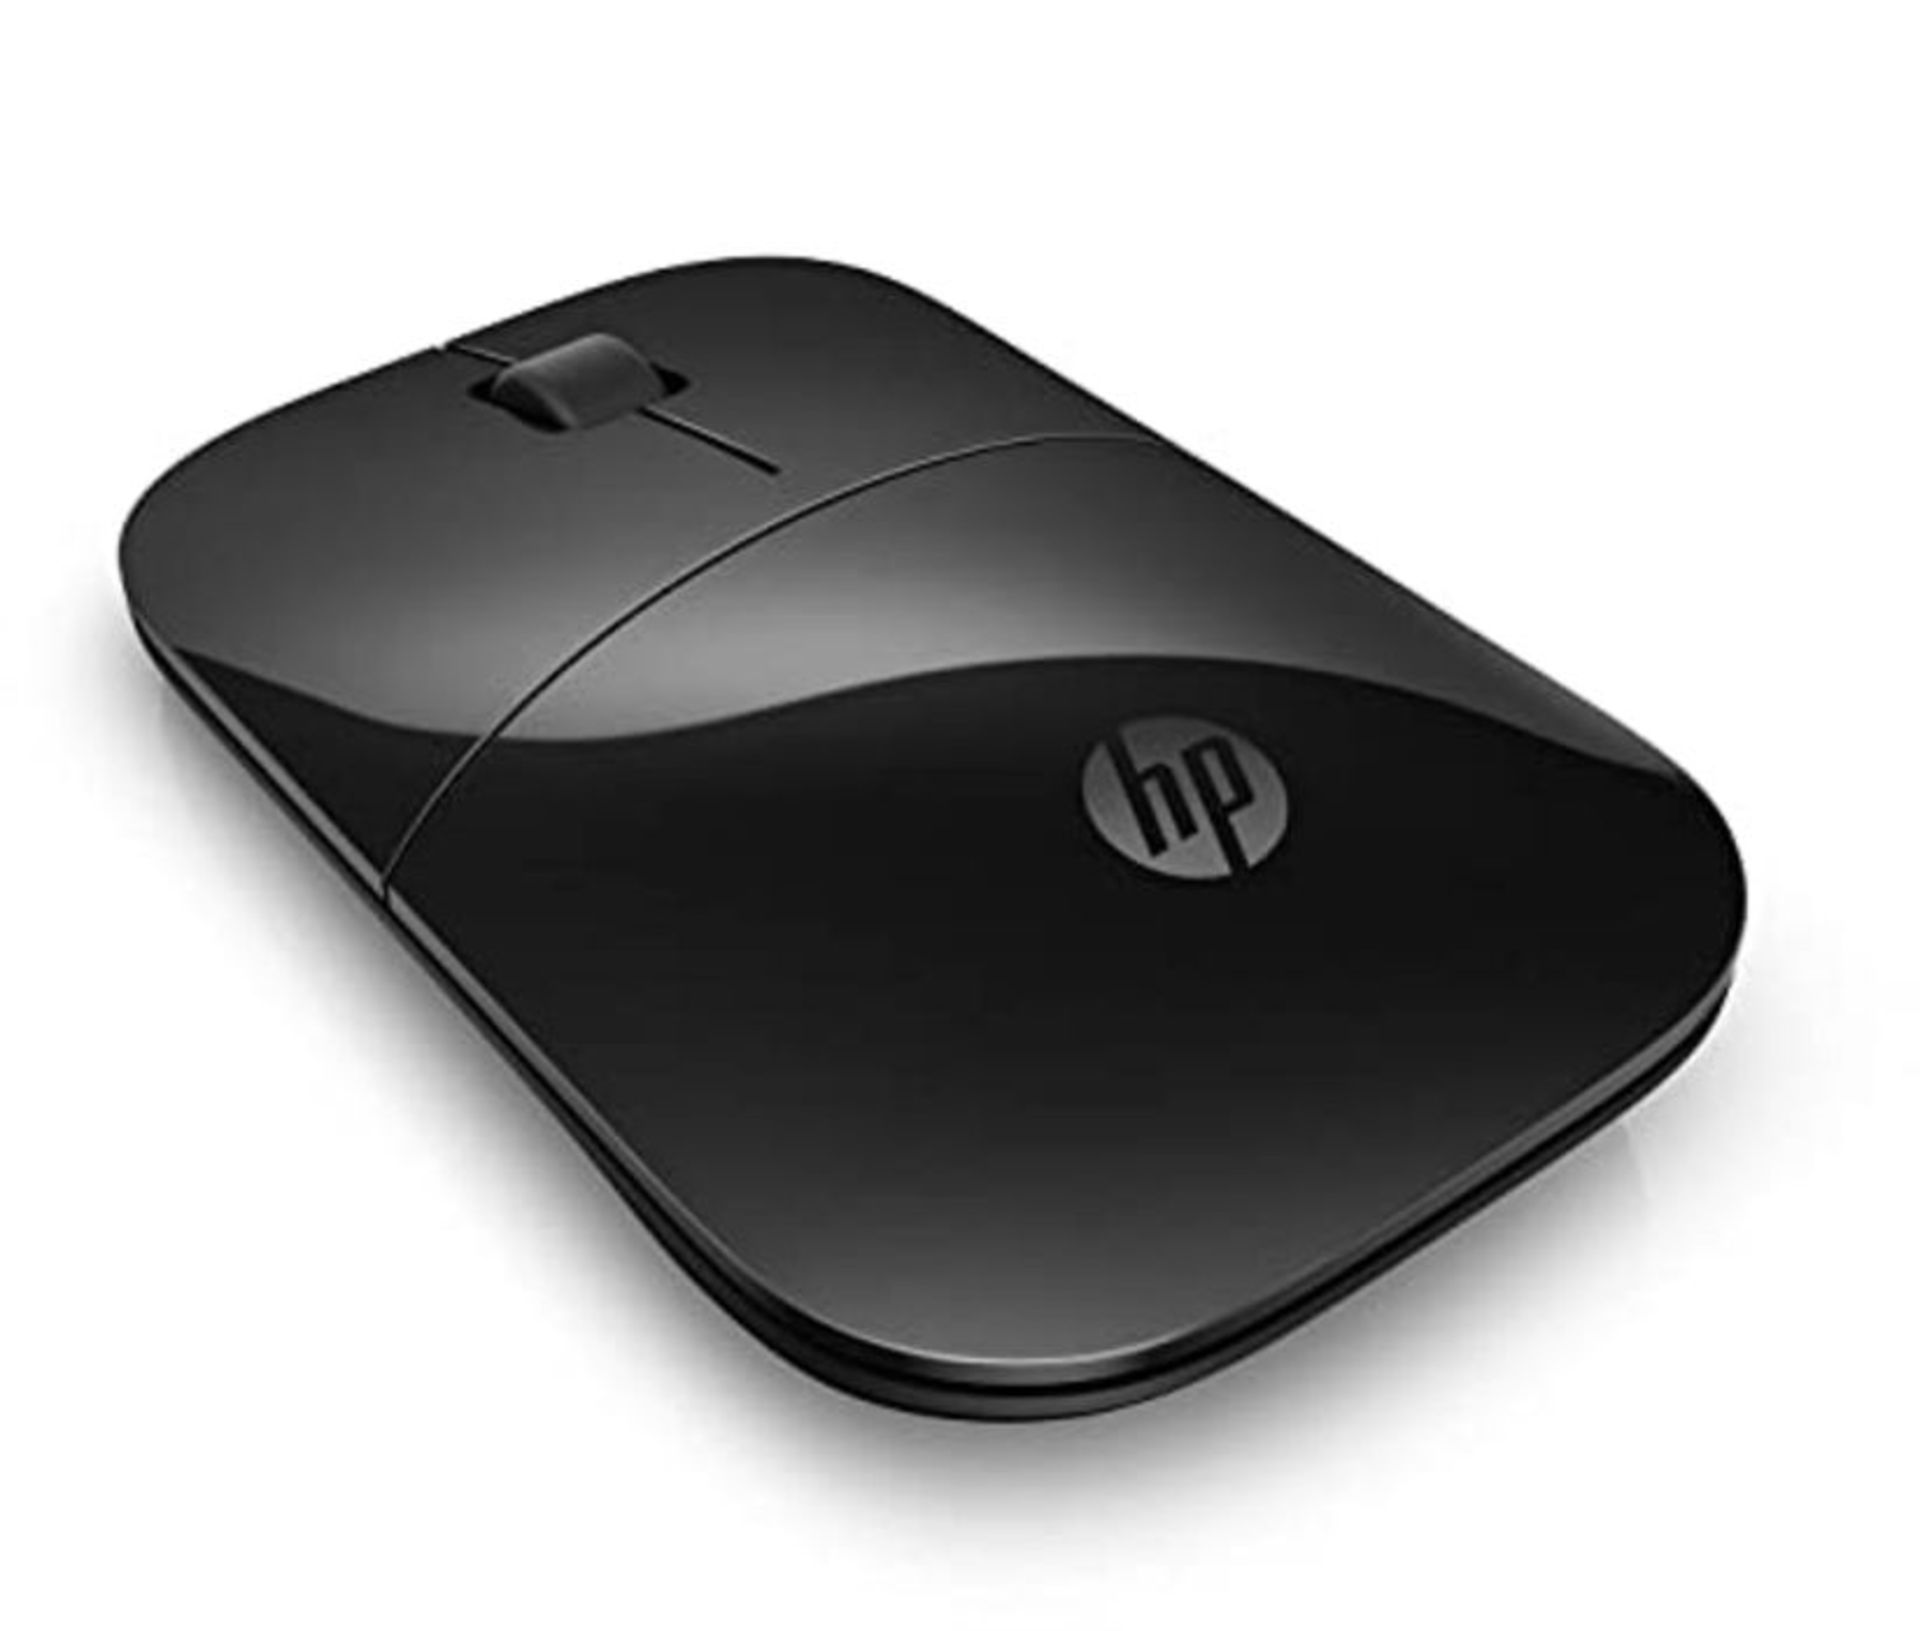 HP Z3700 Black 2.4 GHz USB Slim Wireless Mouse with Blue LED 1200 DPI Optical Sensor,